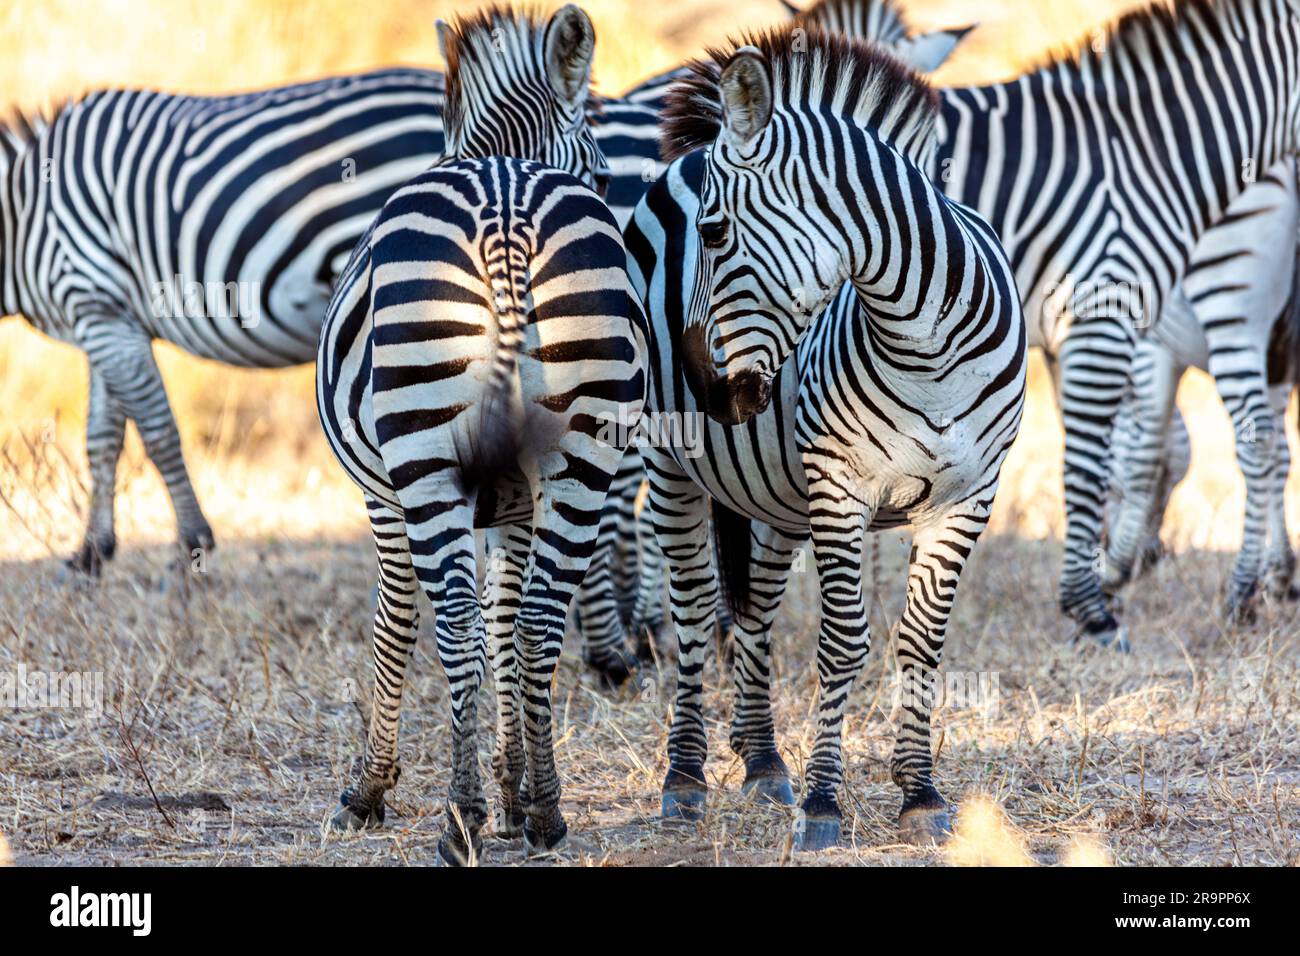 Wild zebras in the African savannah Stock Photo